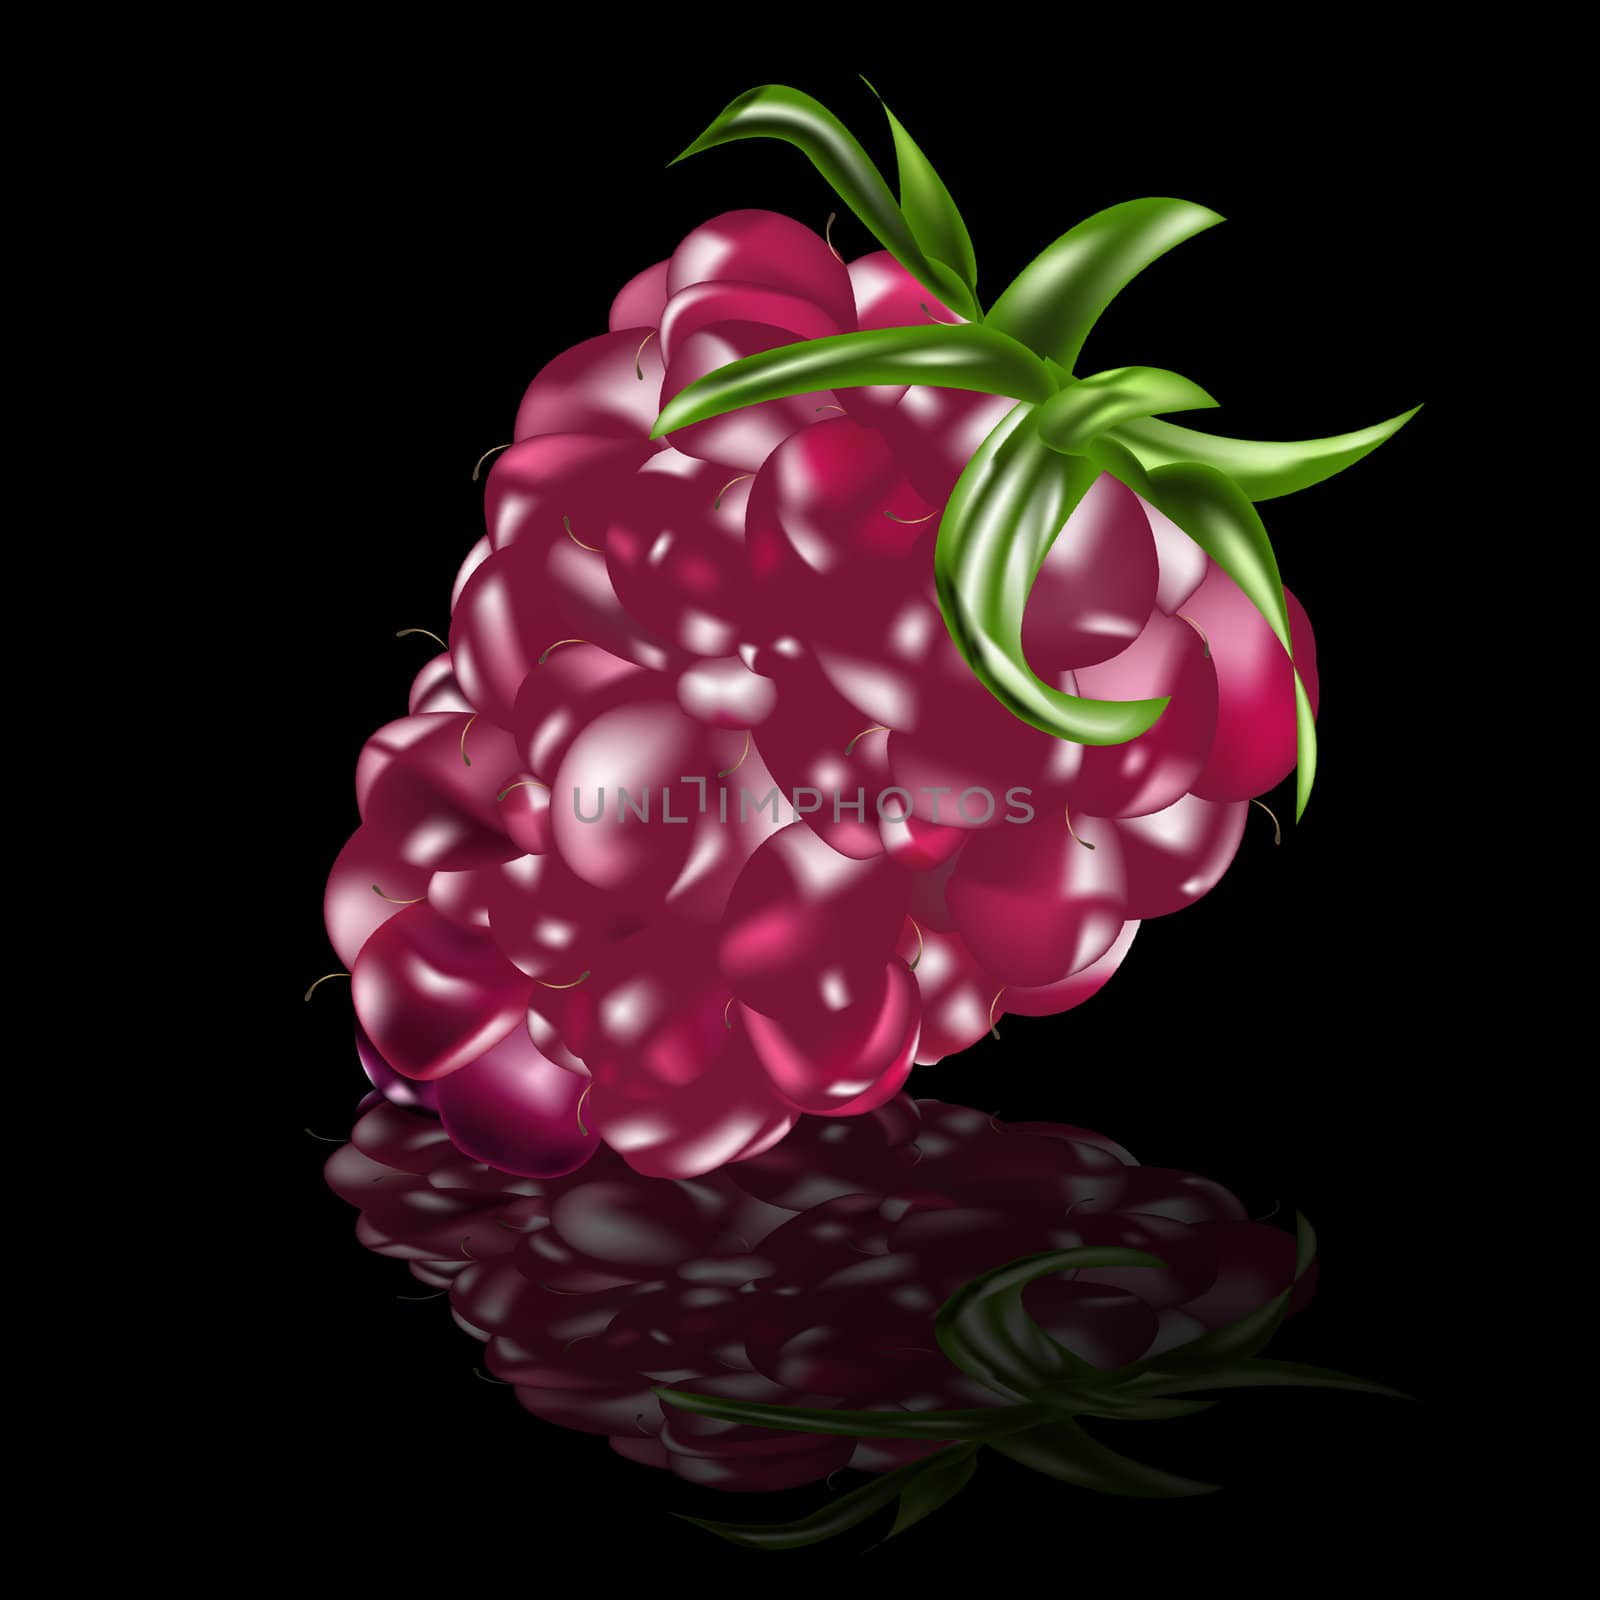 Raspberry on a black background by sergey150770SV